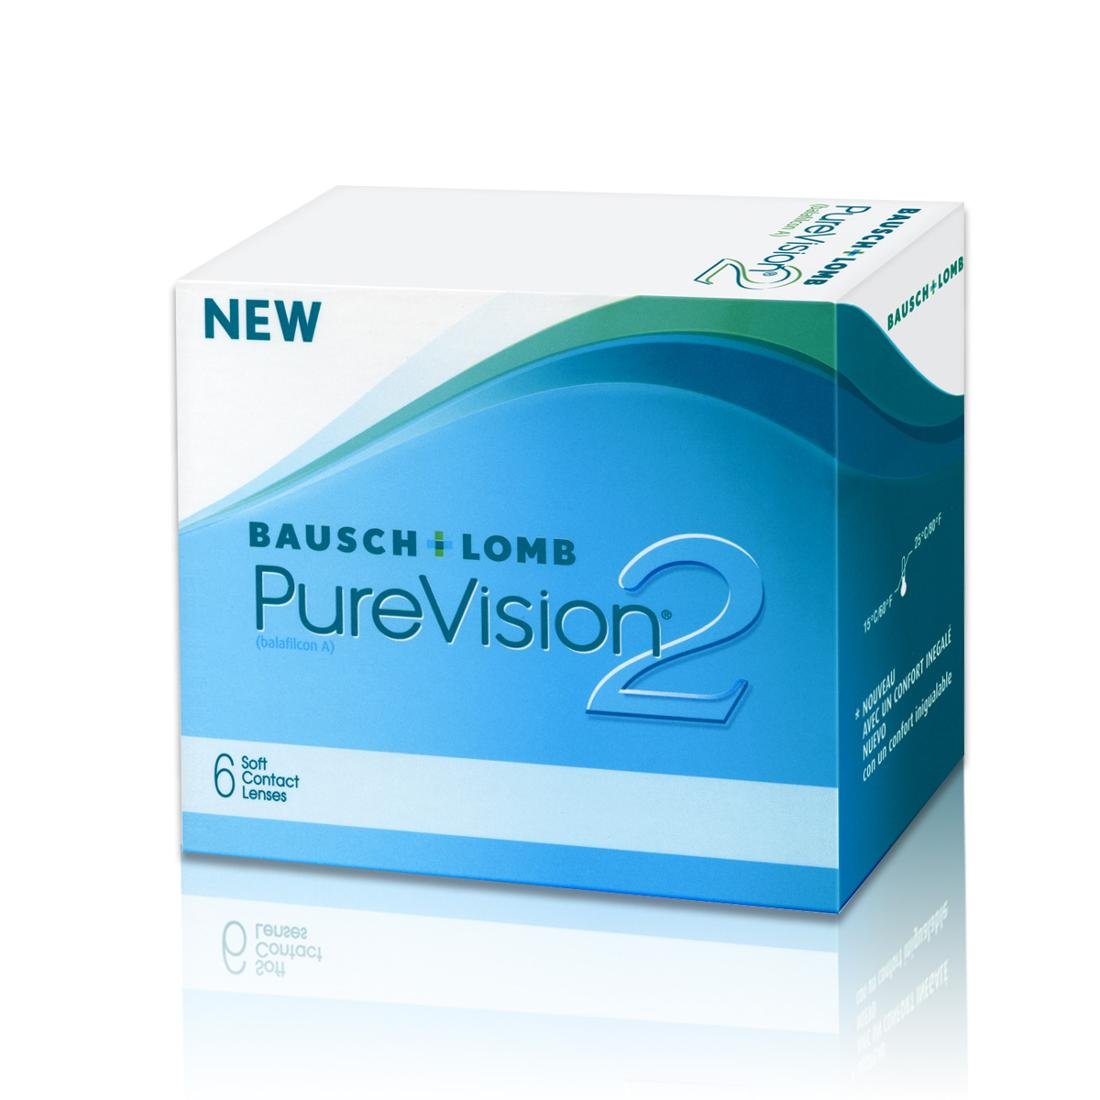 Bausch & Lomb Pure Vision 2 6 szt. Soczewki miesięczne (-6.00 dpt & BC 8.6)